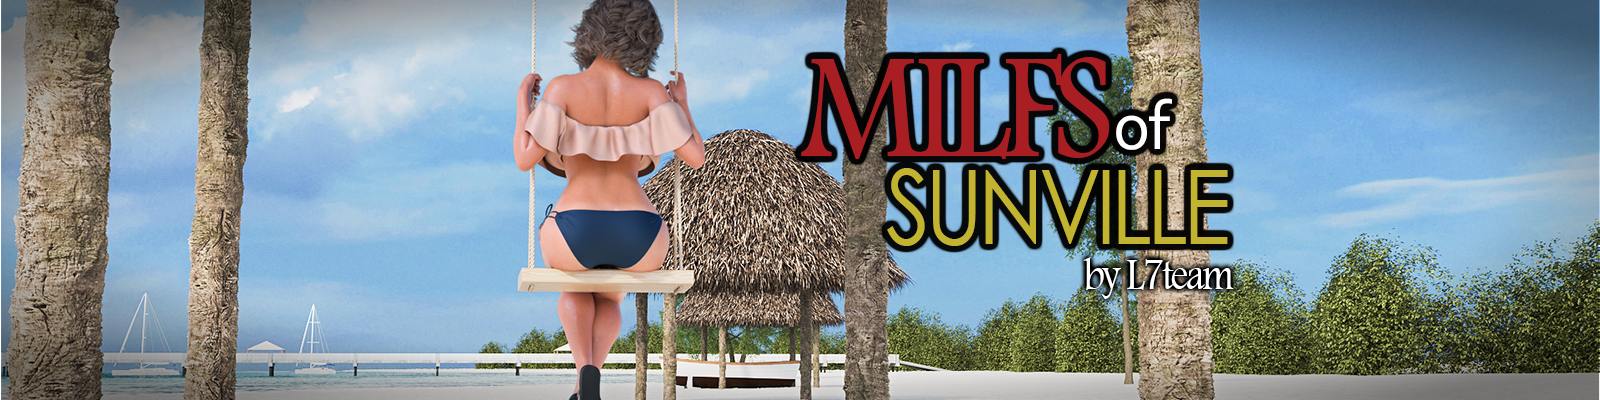 MILFs of Sunville [L7team] Adult xxx Game Download